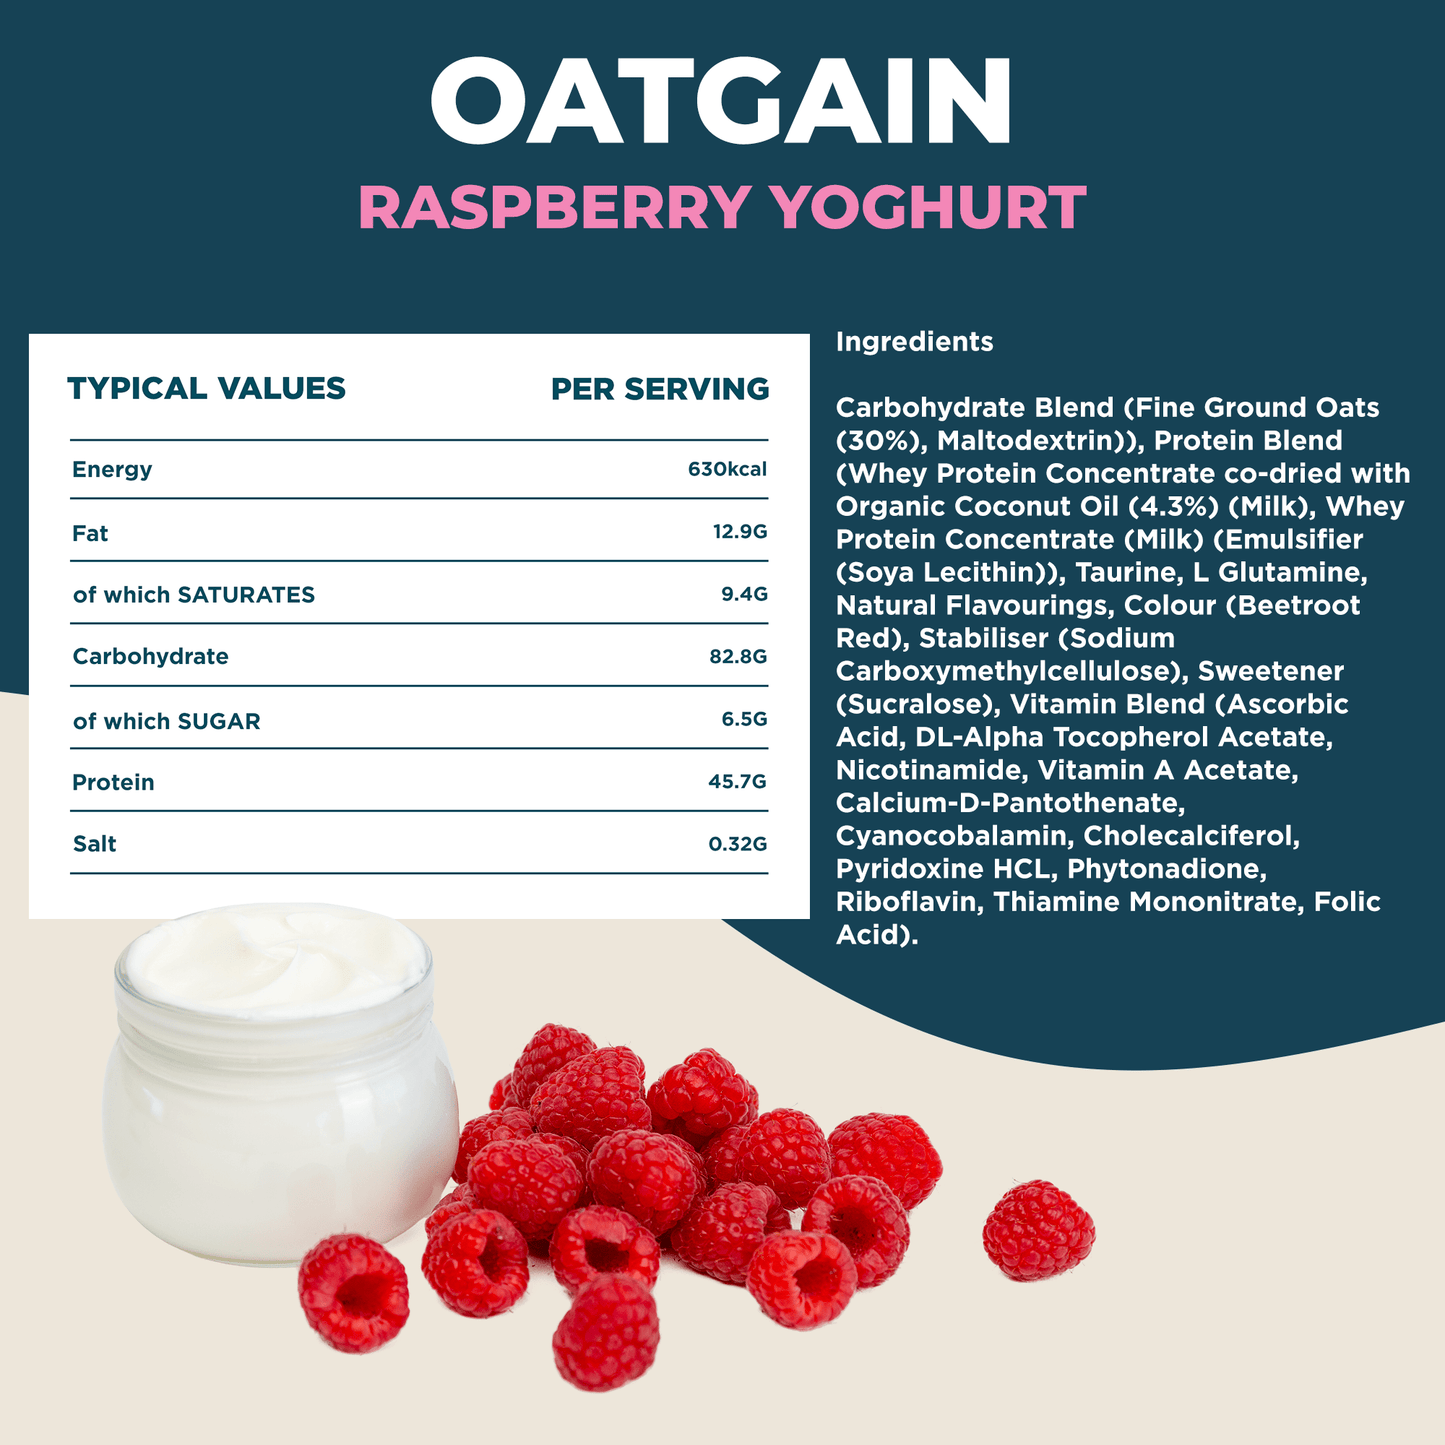 Oatgain Raspberry Yoghurt Nutritional Information